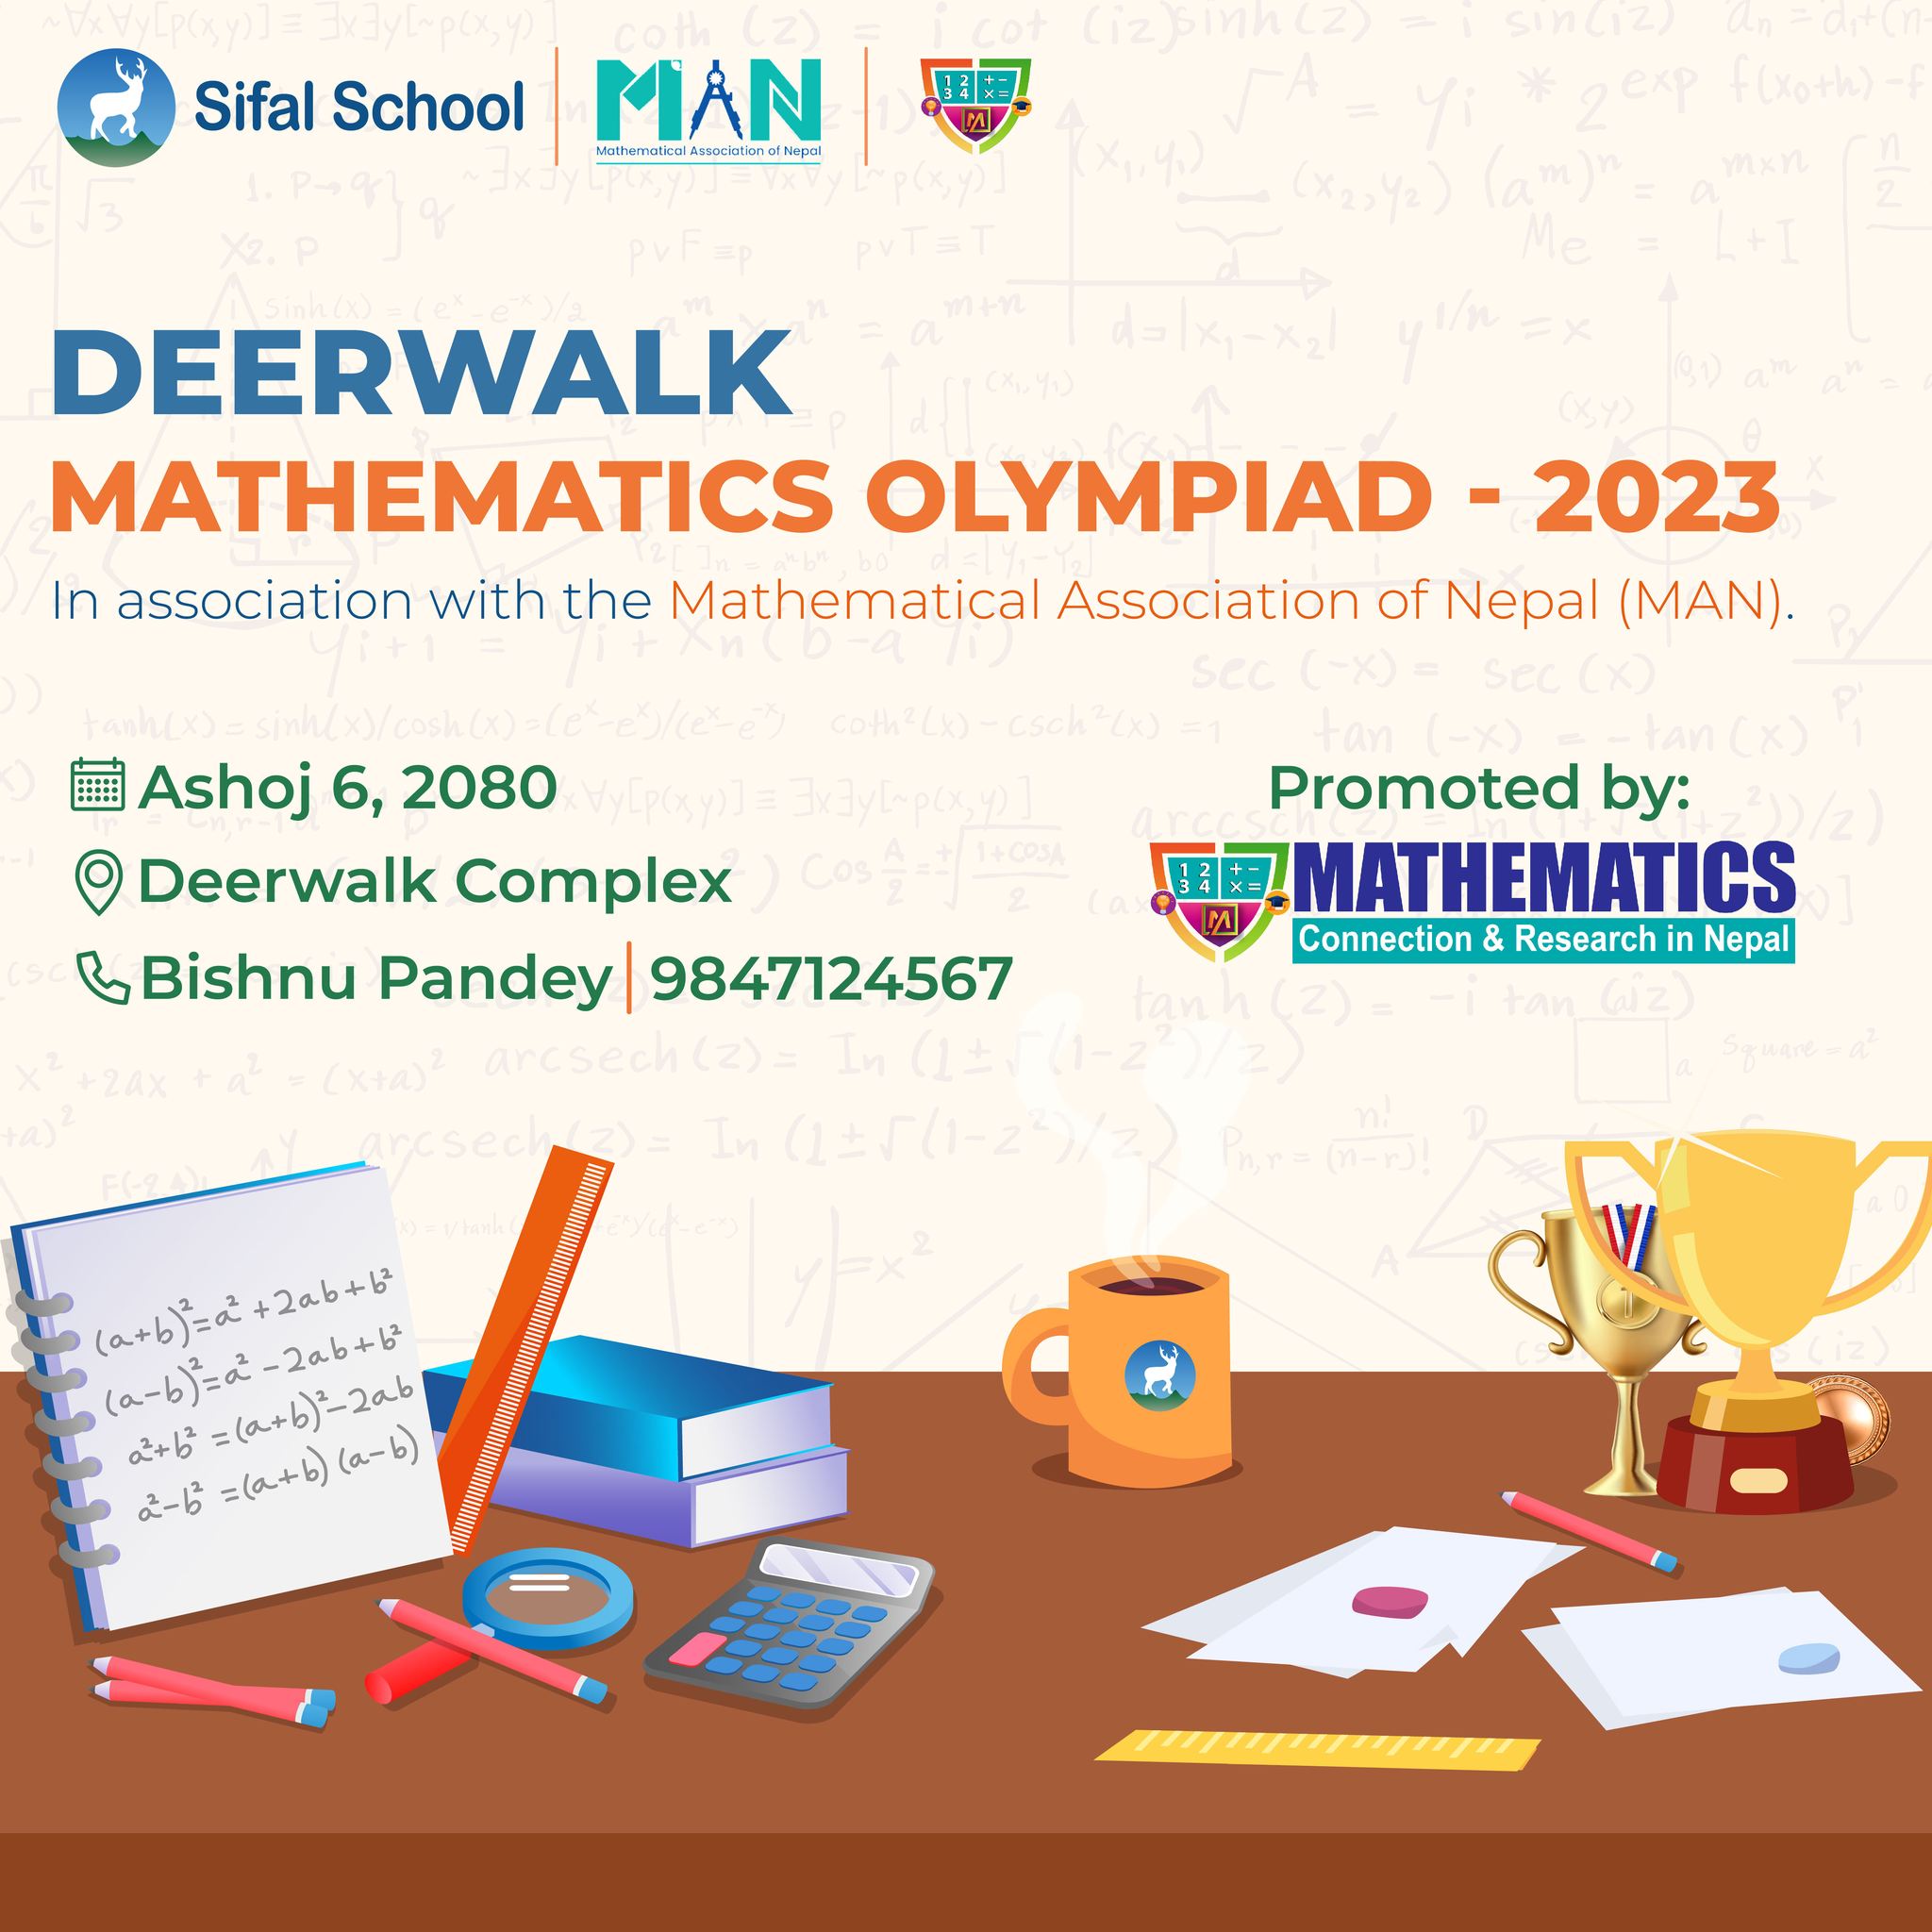 Deerwalk Mathematics Olympiad